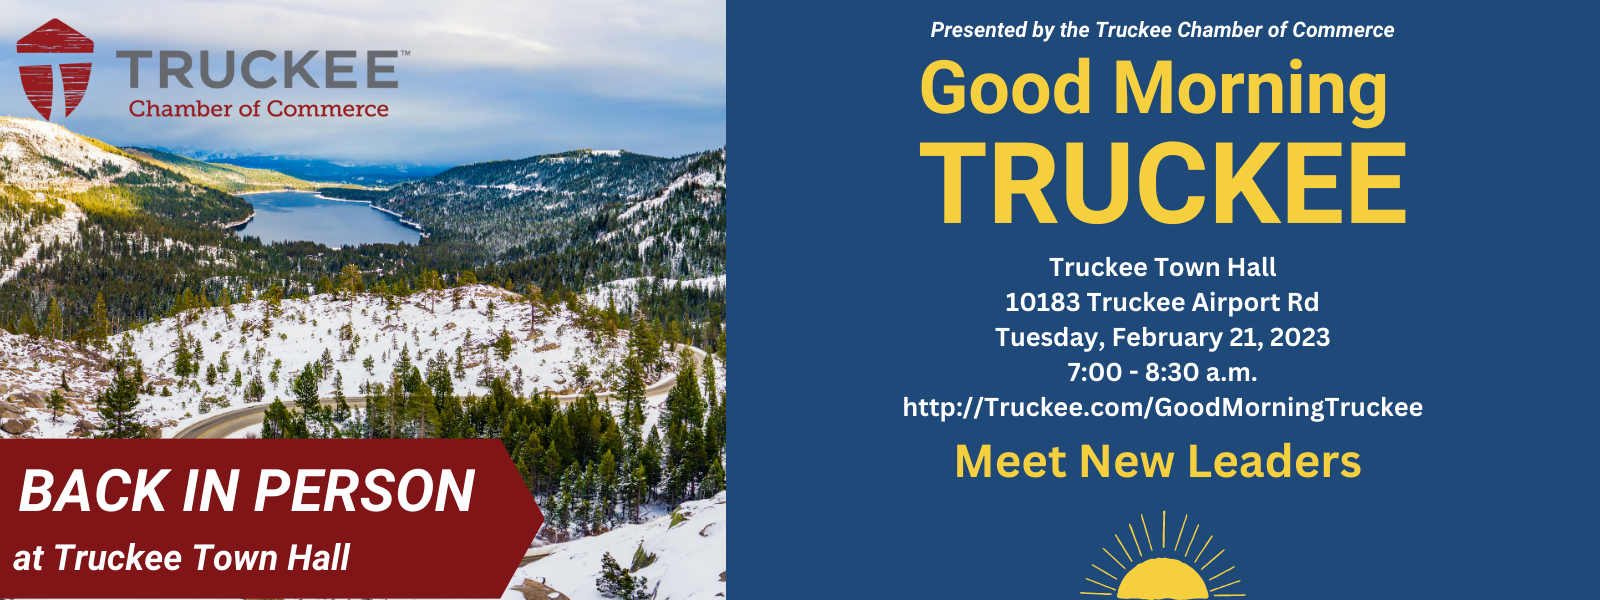 February 21, 2023 Good Morning Truckee - New Community Leaders